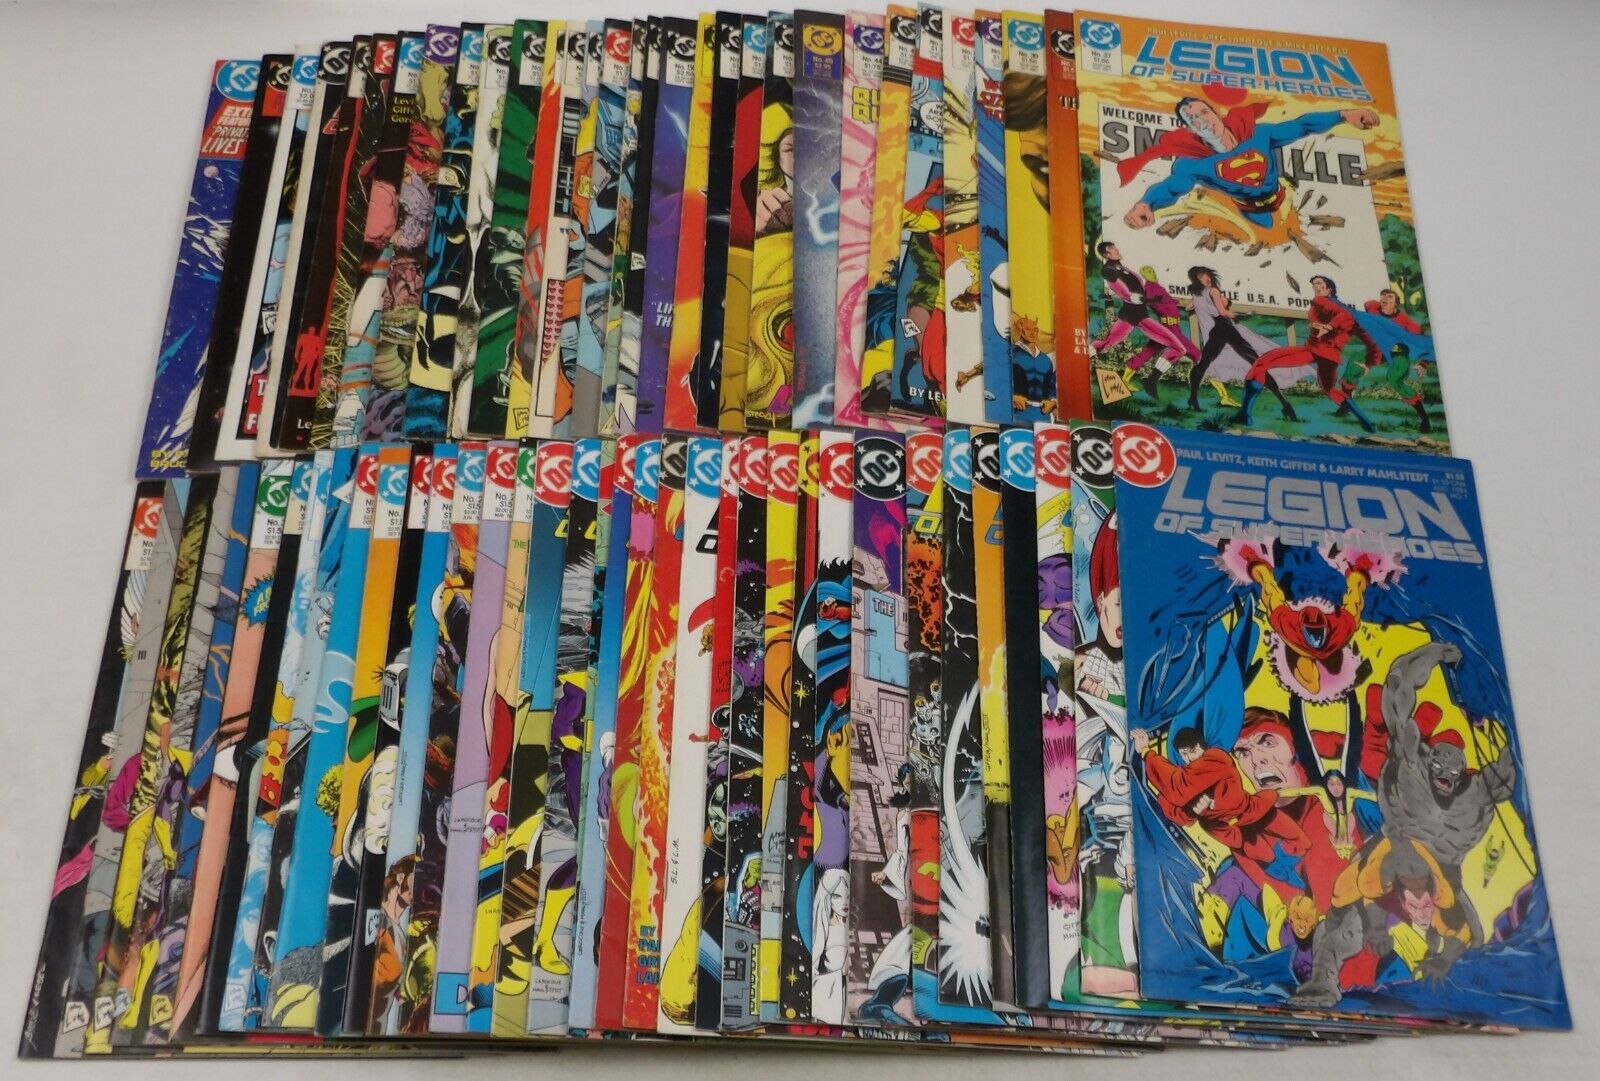 Legion of Super-Heroes Vol. 3 #1-63 VF/NM complete series + Annual #1-4 1984